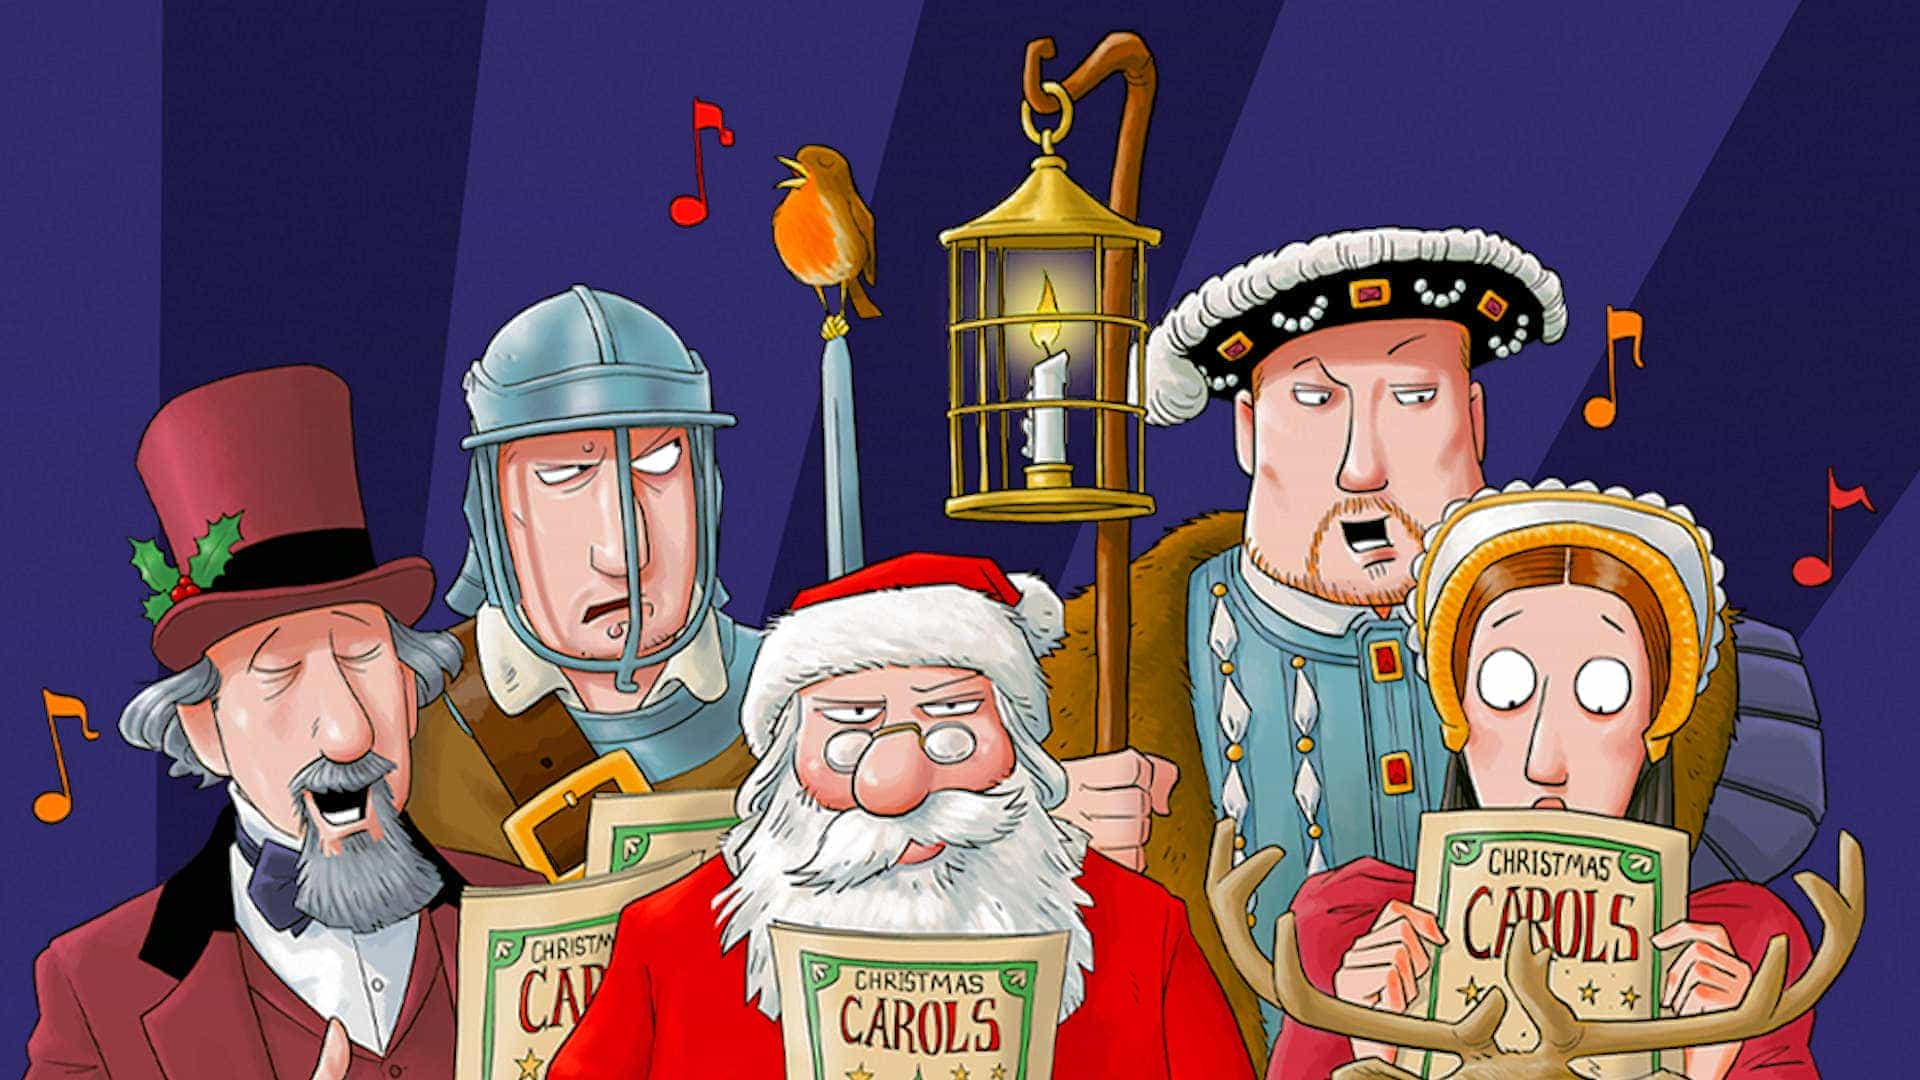 Horrible Histories - Horrible Christmas